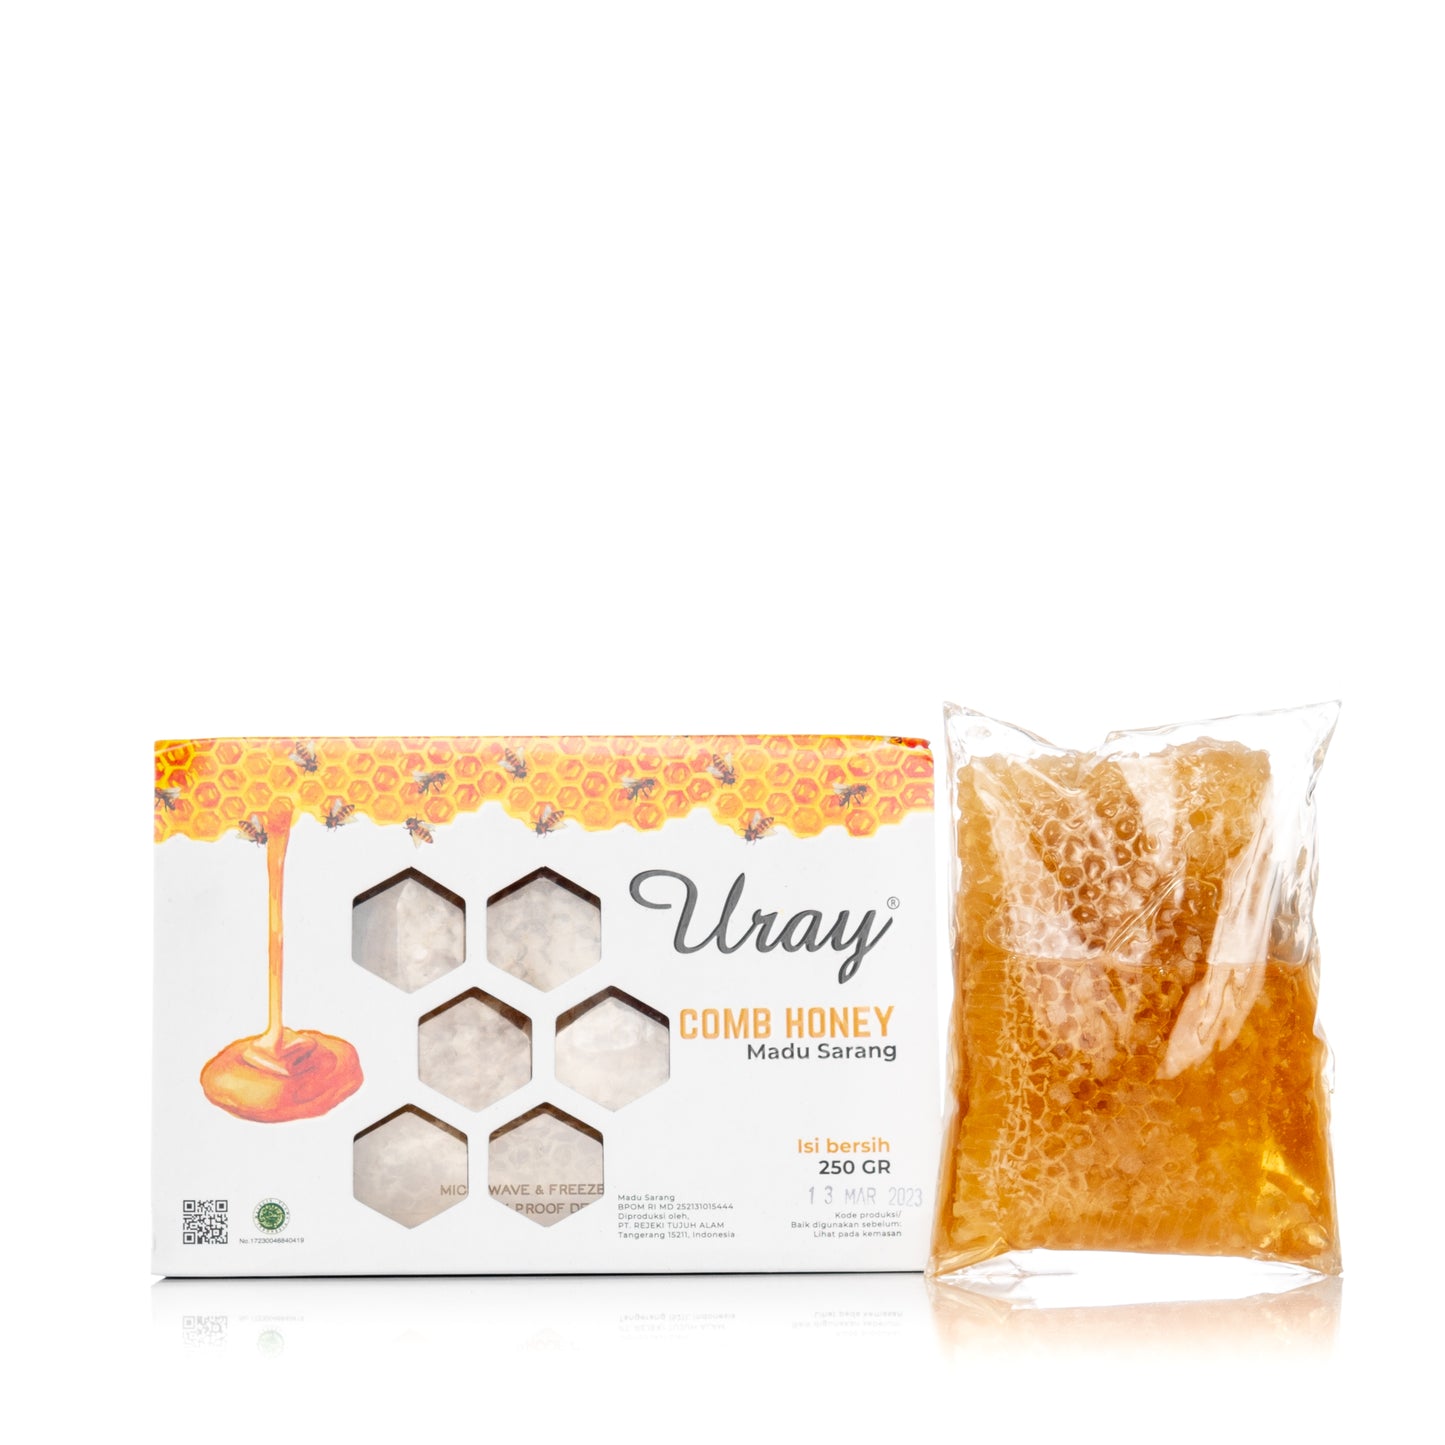 Uray Comb Honey 250g